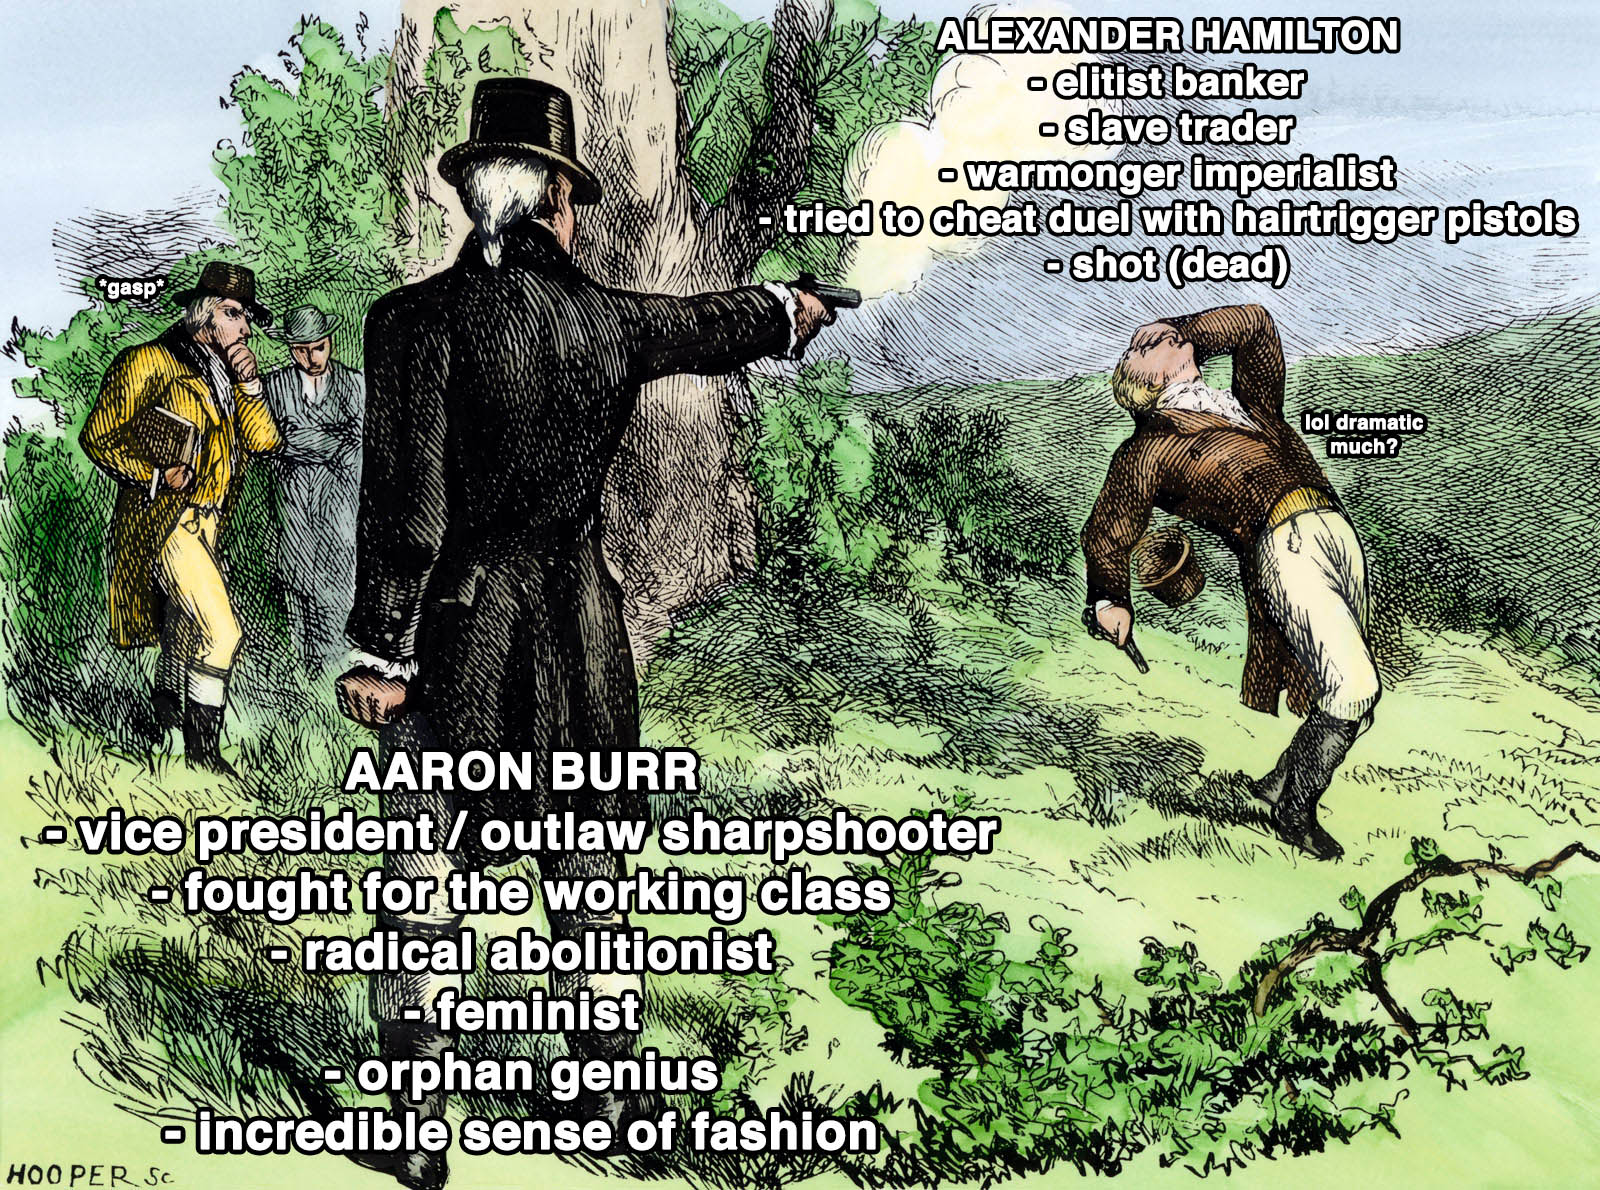 Aaron Burr 360-no-scopes Hamilton